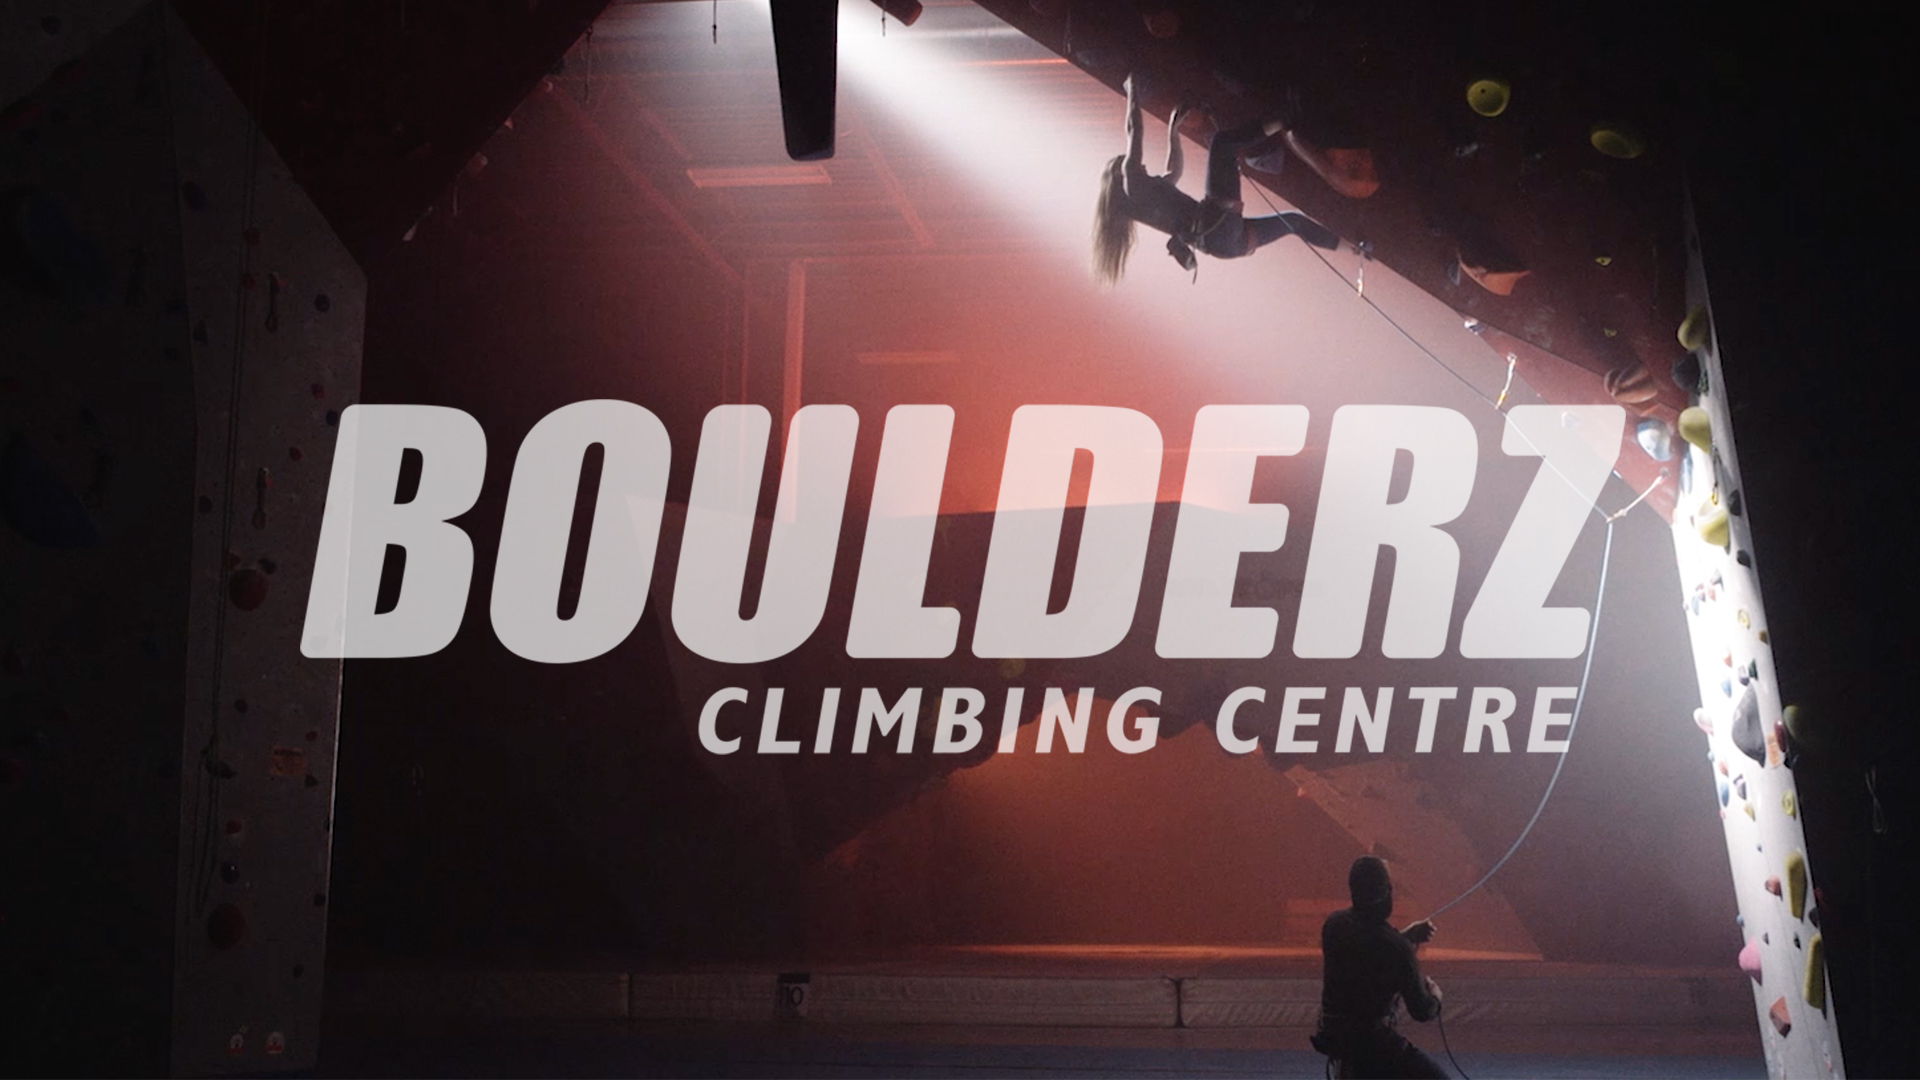 Boulderz Climbing Centre